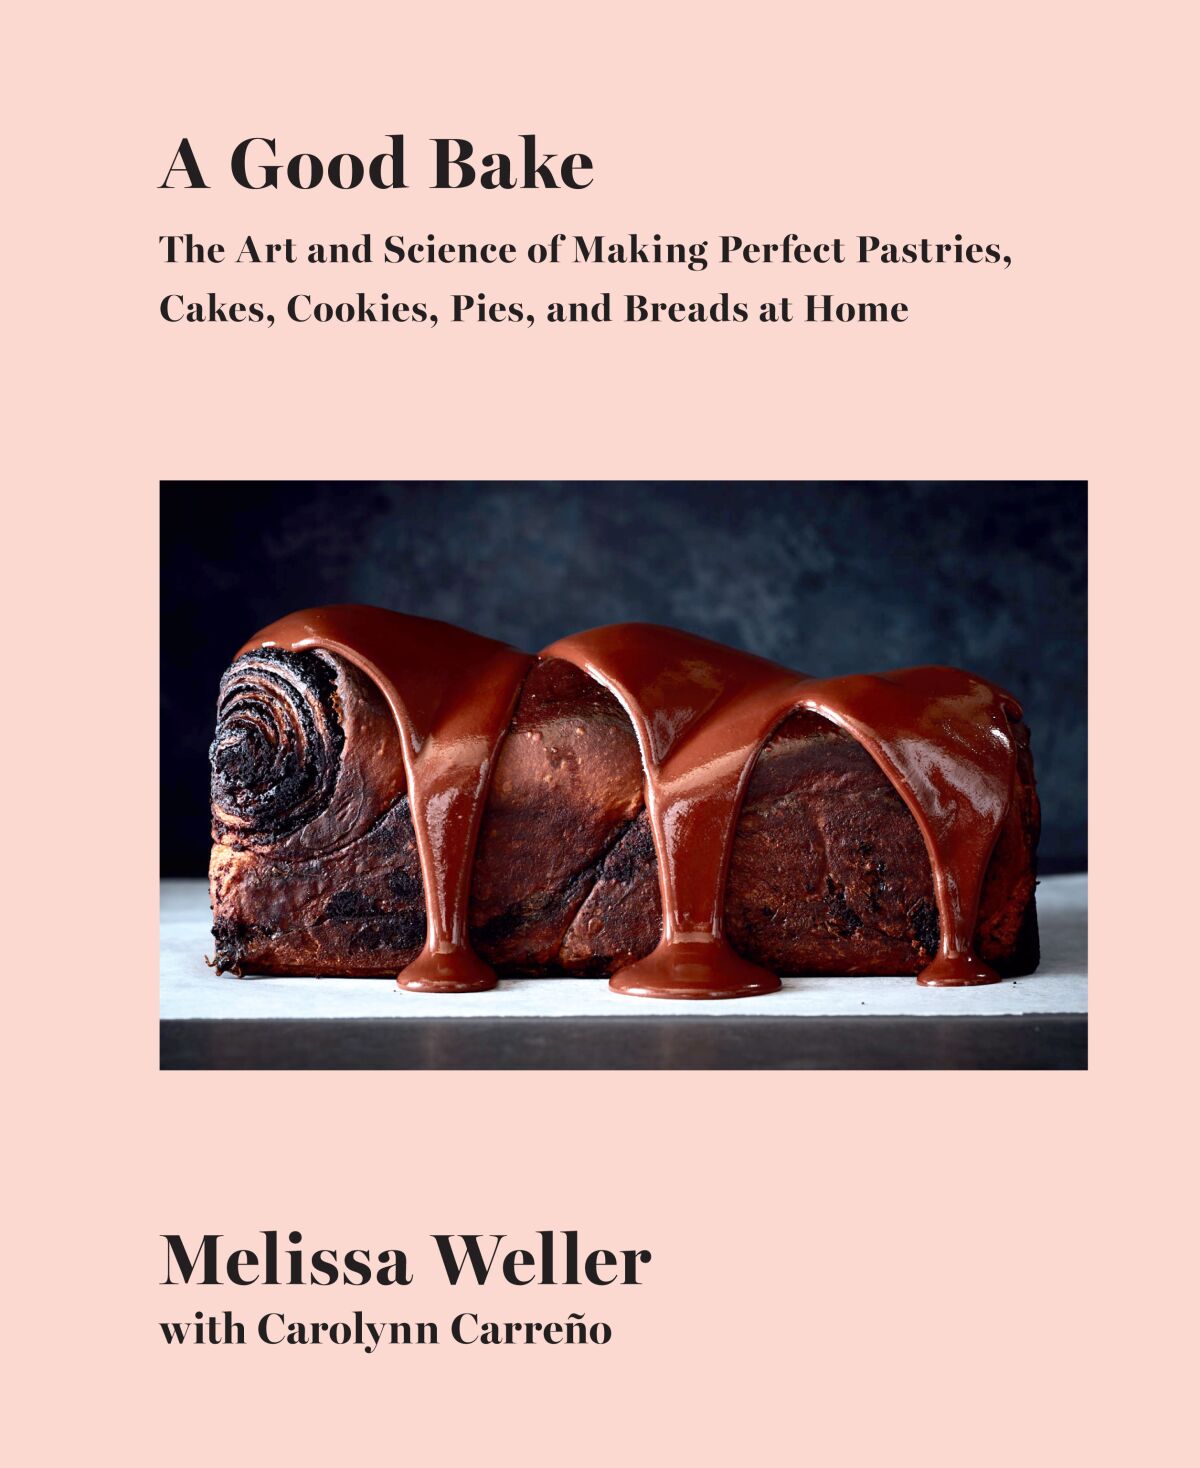 A Good Bake by Melissa Weller with Carolynn Carreno